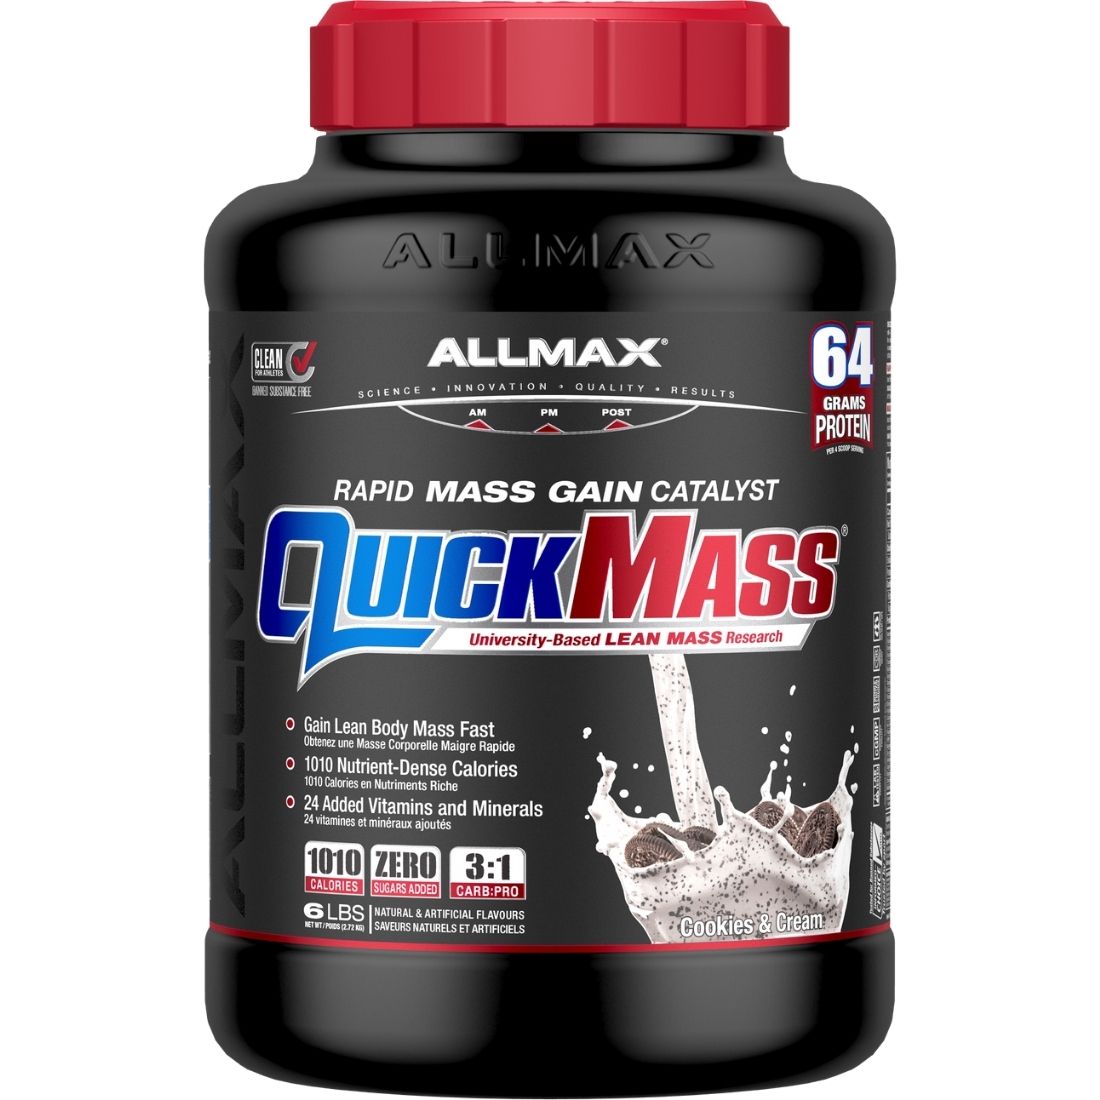 Allmax QuickMass, Rapid Lean Mass Gainer, 1010 Calories Plus Vitamins and Minerals